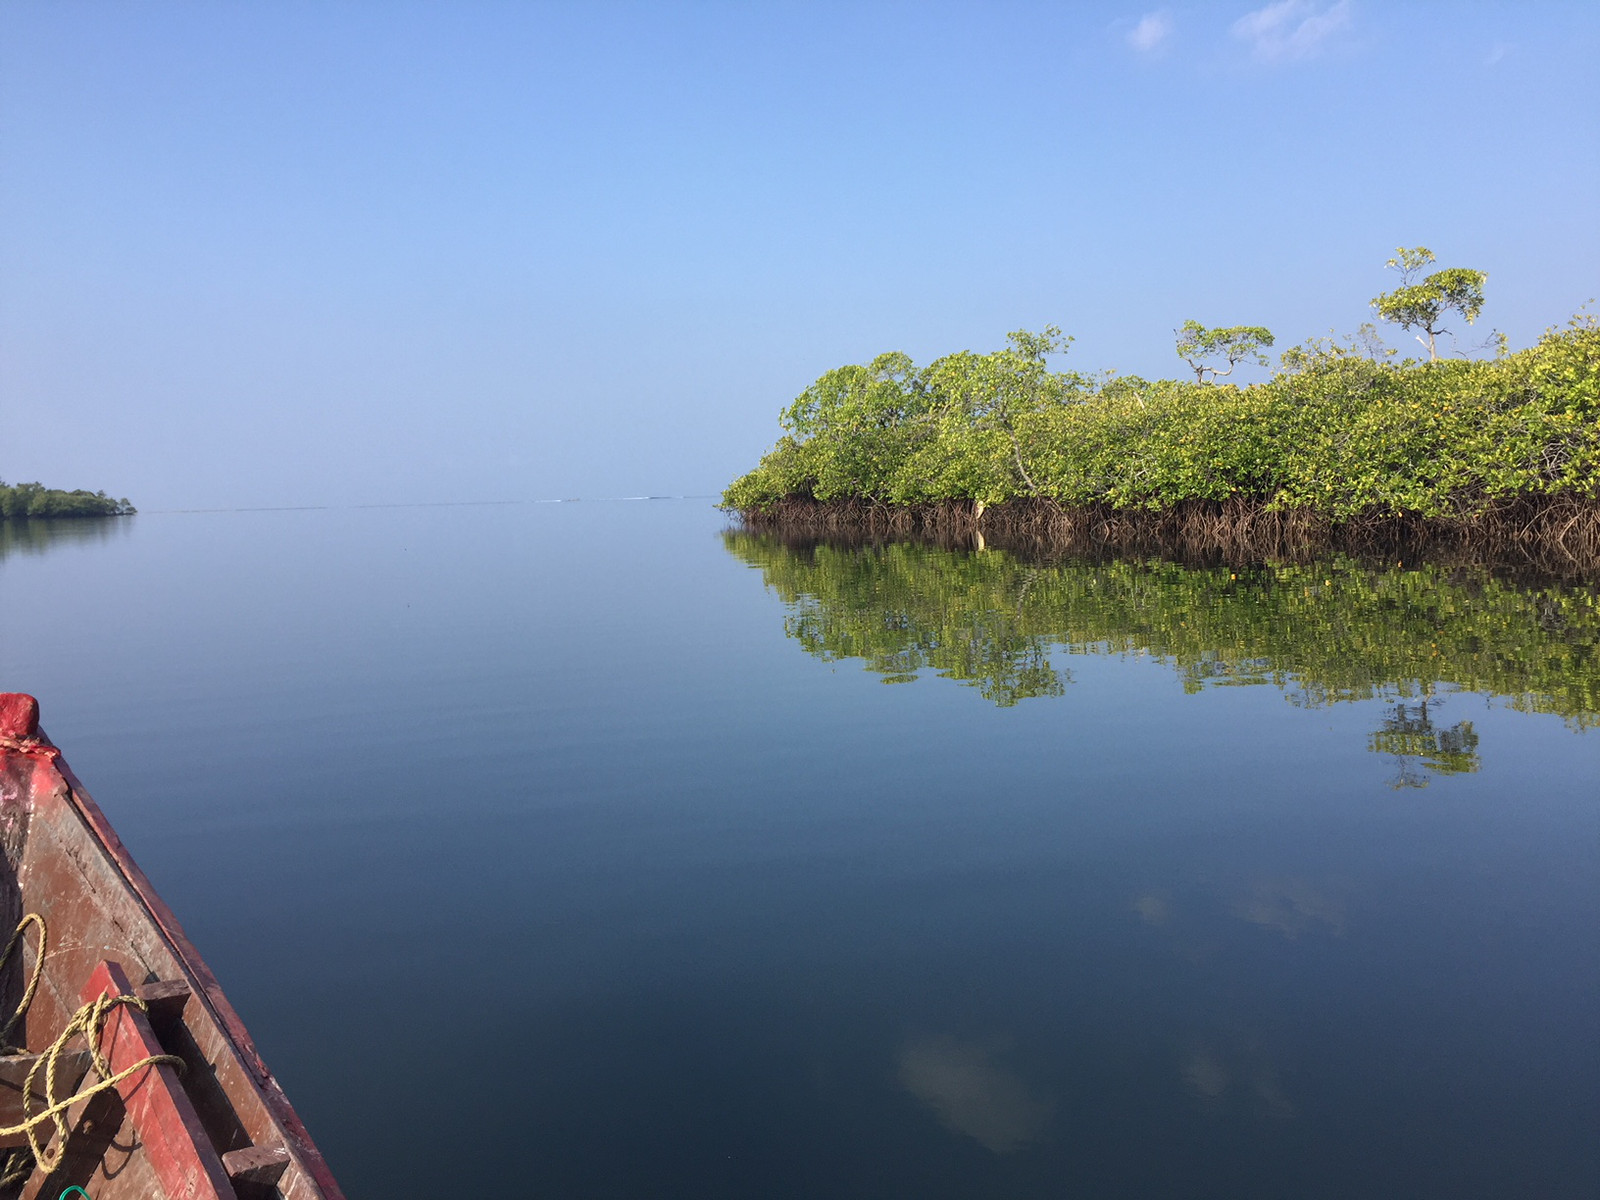 Kyaking Through Mangroves To The Sea